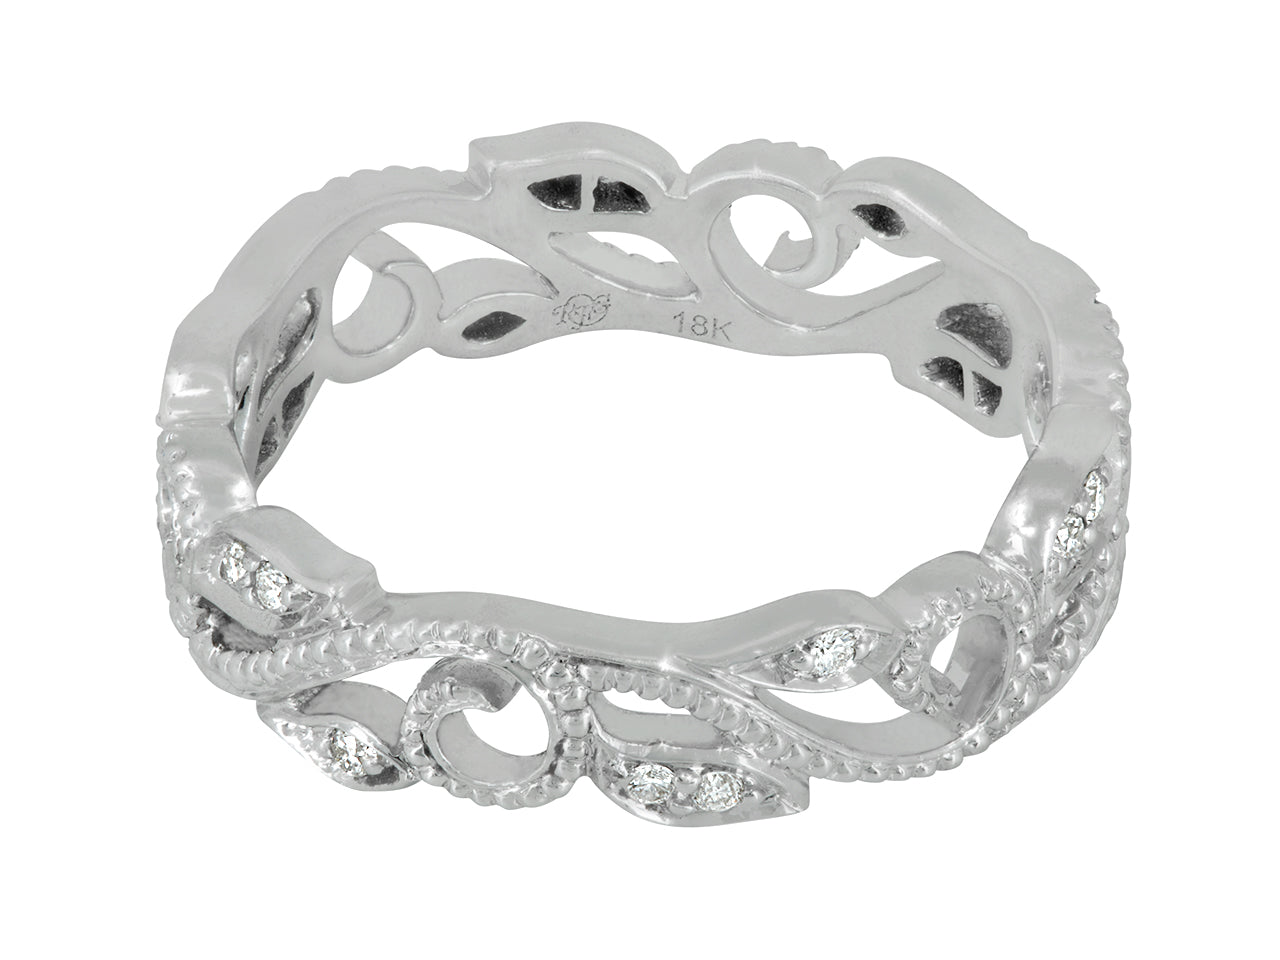 Rhonda Faber Green 'Vine' Diamond Ring in 18K White Gold